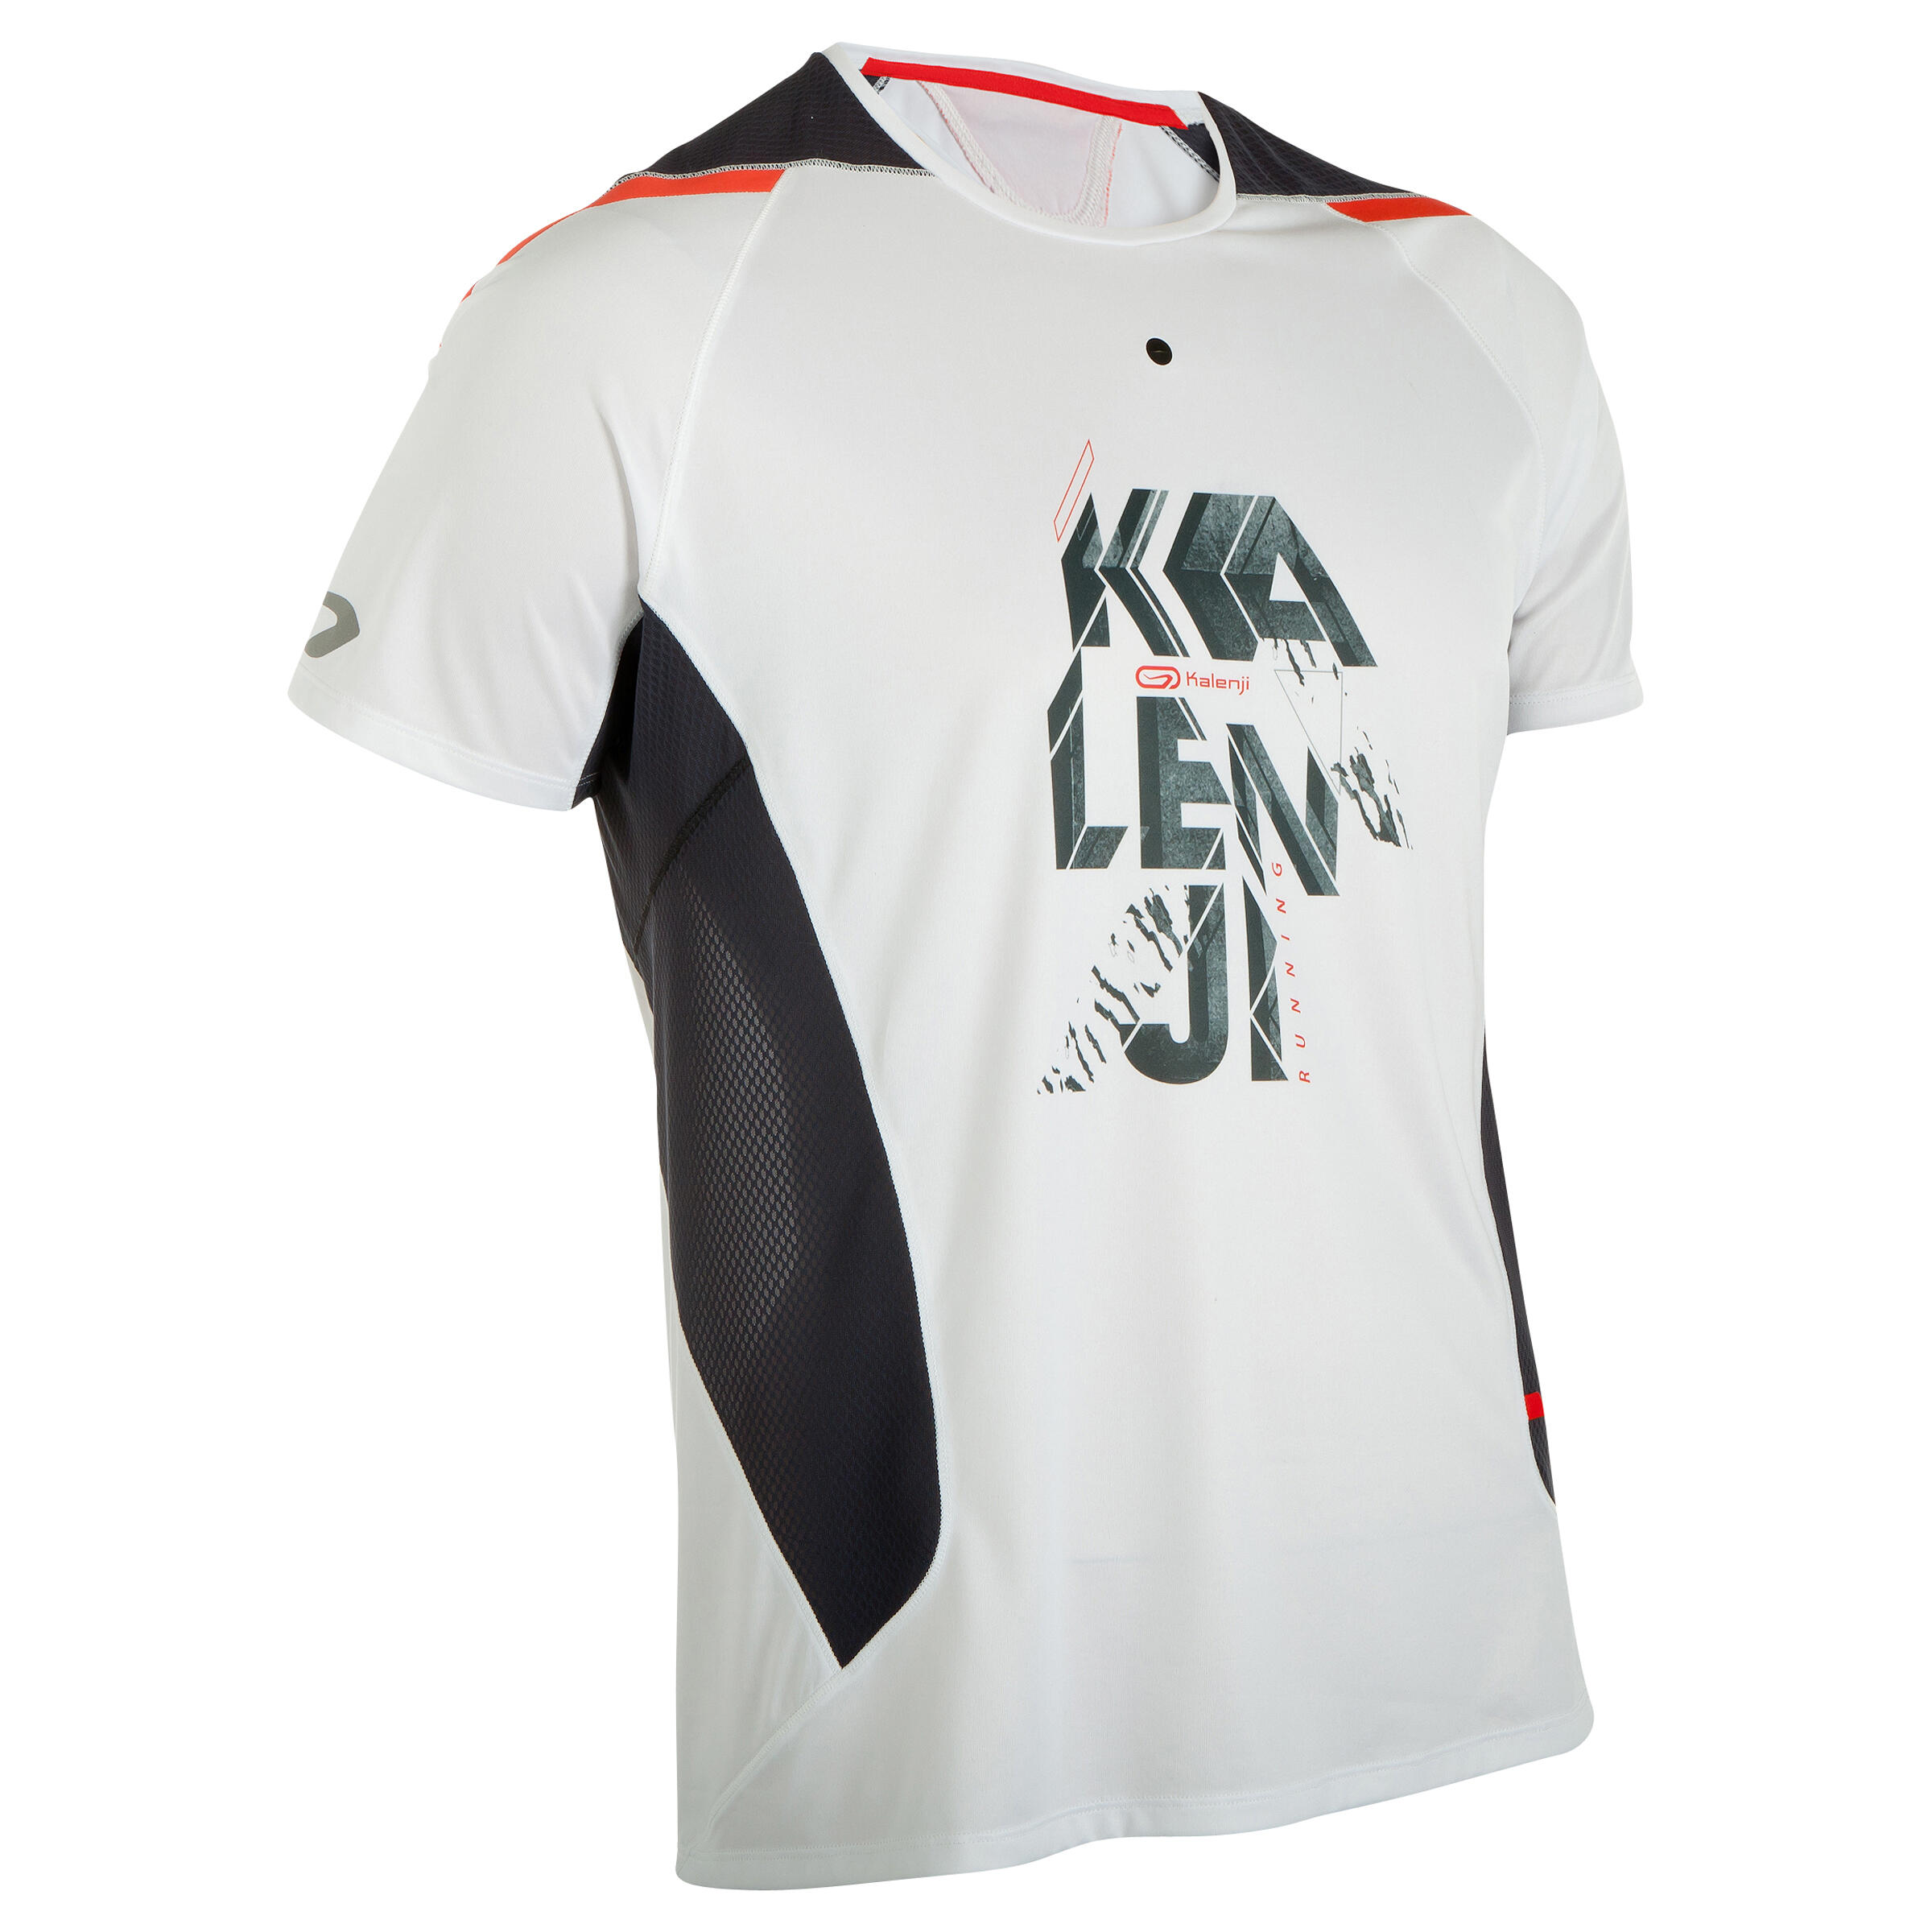 KALENJI Elio Men's Running T-shirt print - white grey red